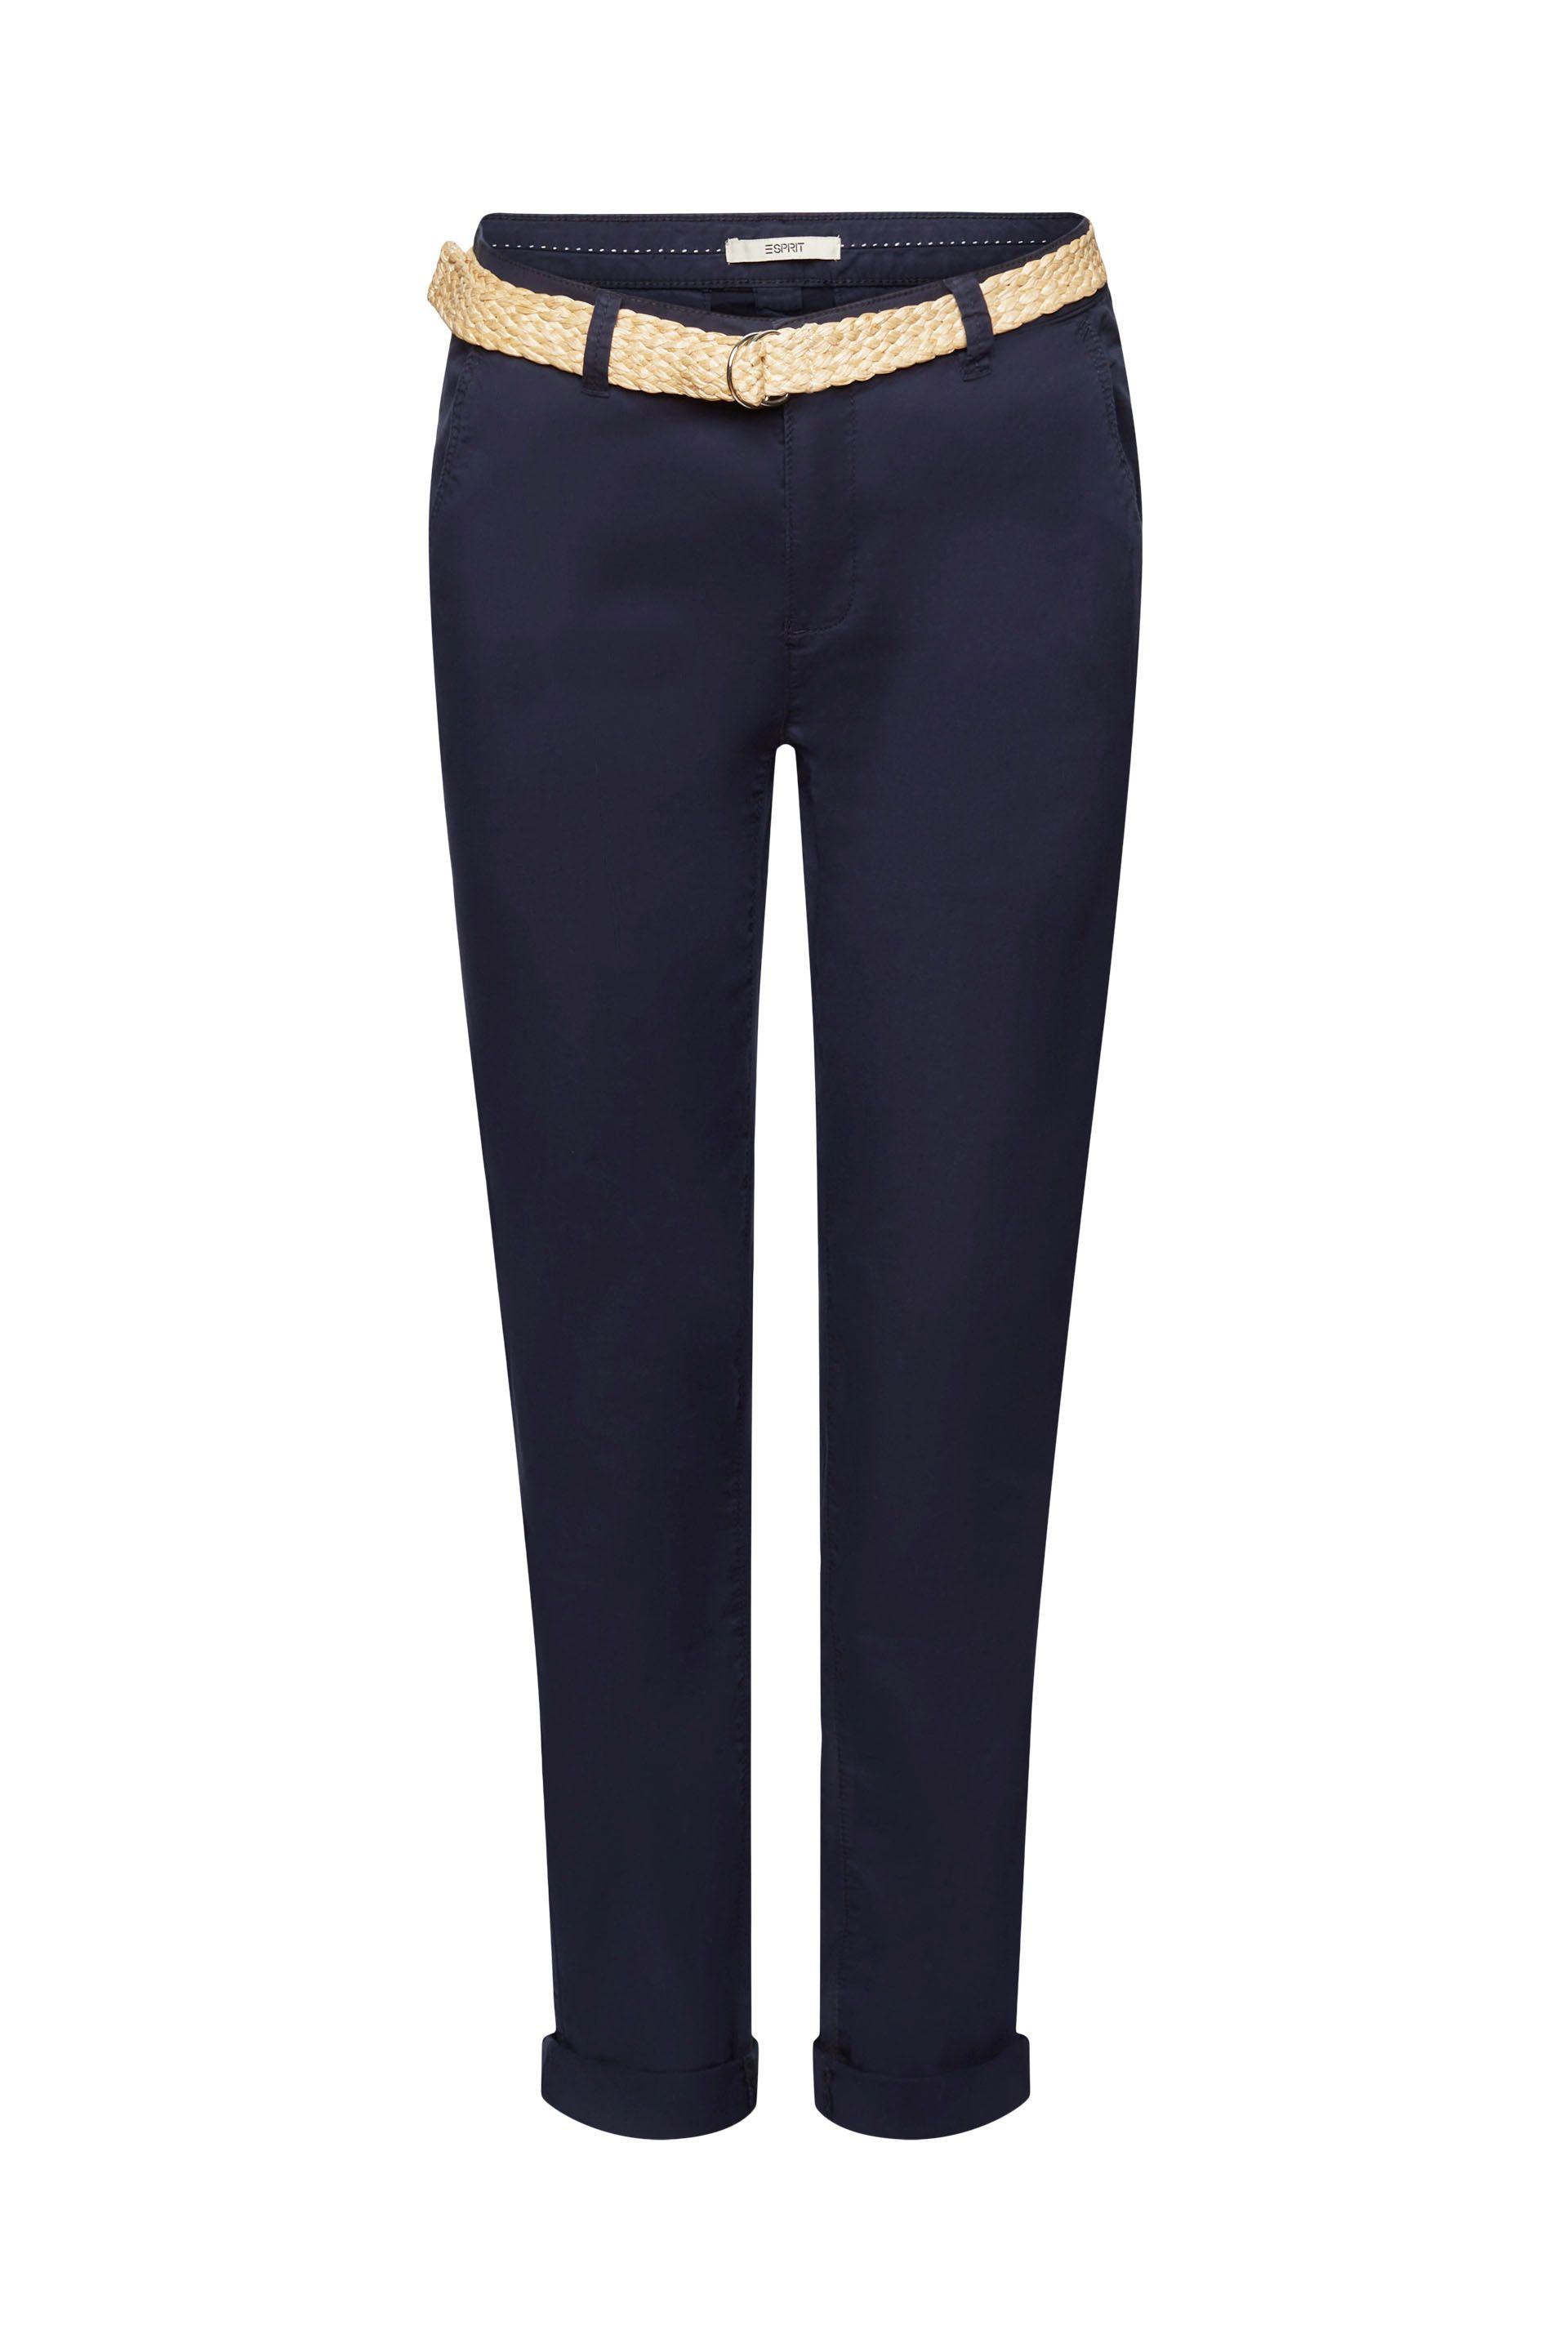 Esprit - Pantaloni chino cropped con cintura, Blu scuro, large image number 0